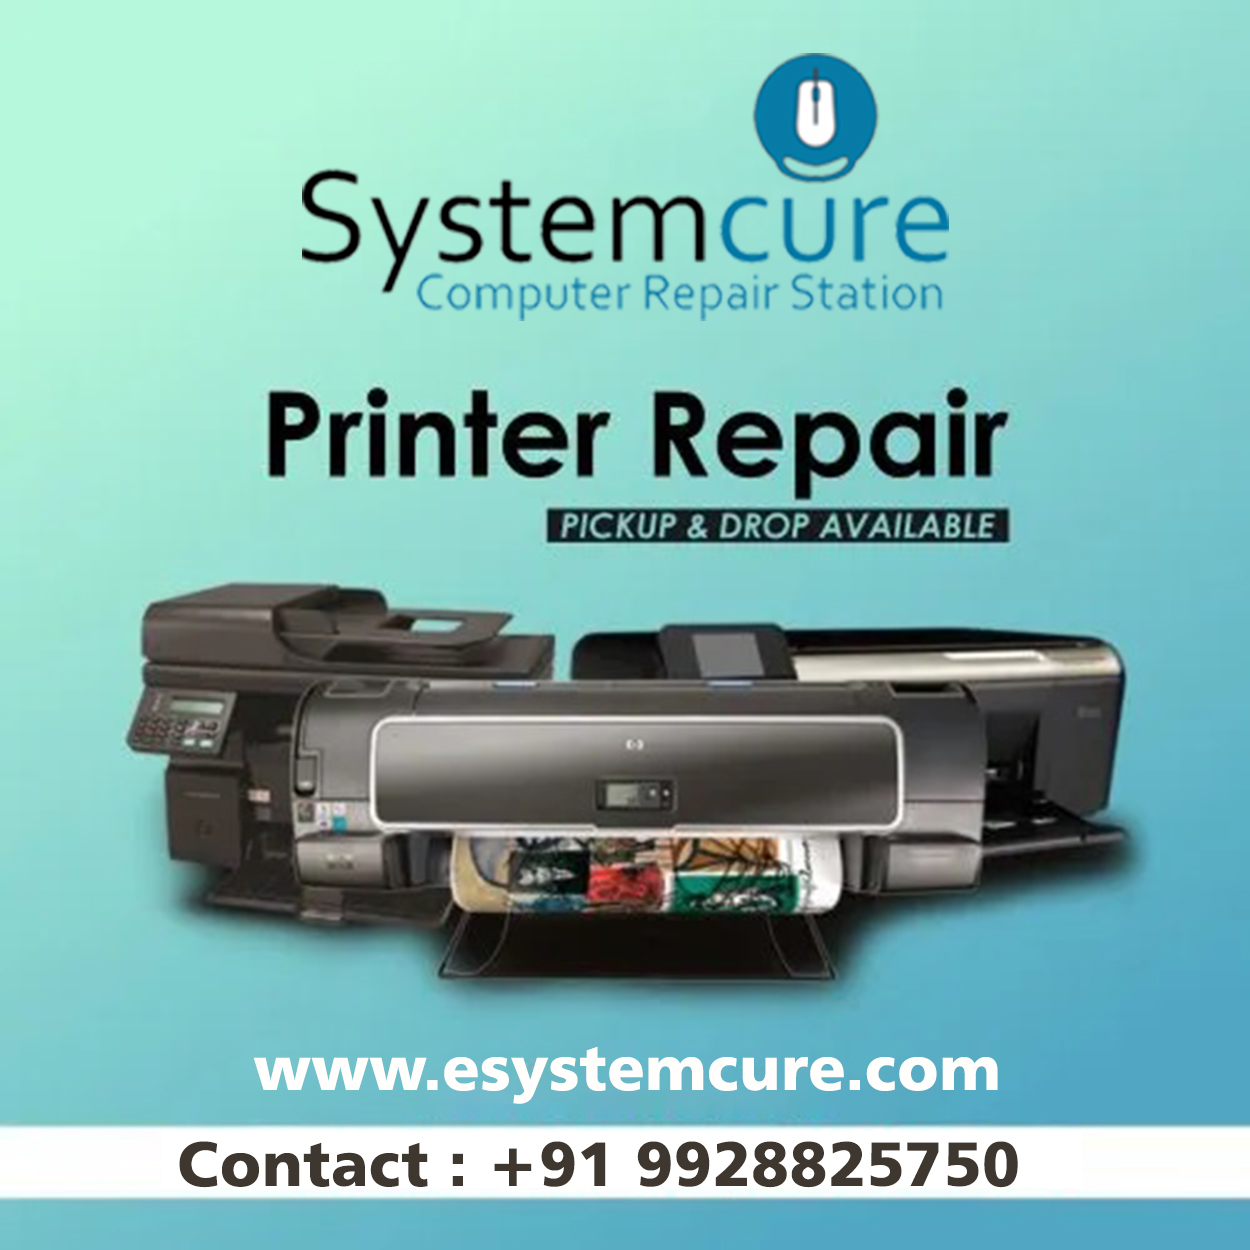 Best-printer repair services near me jaipur